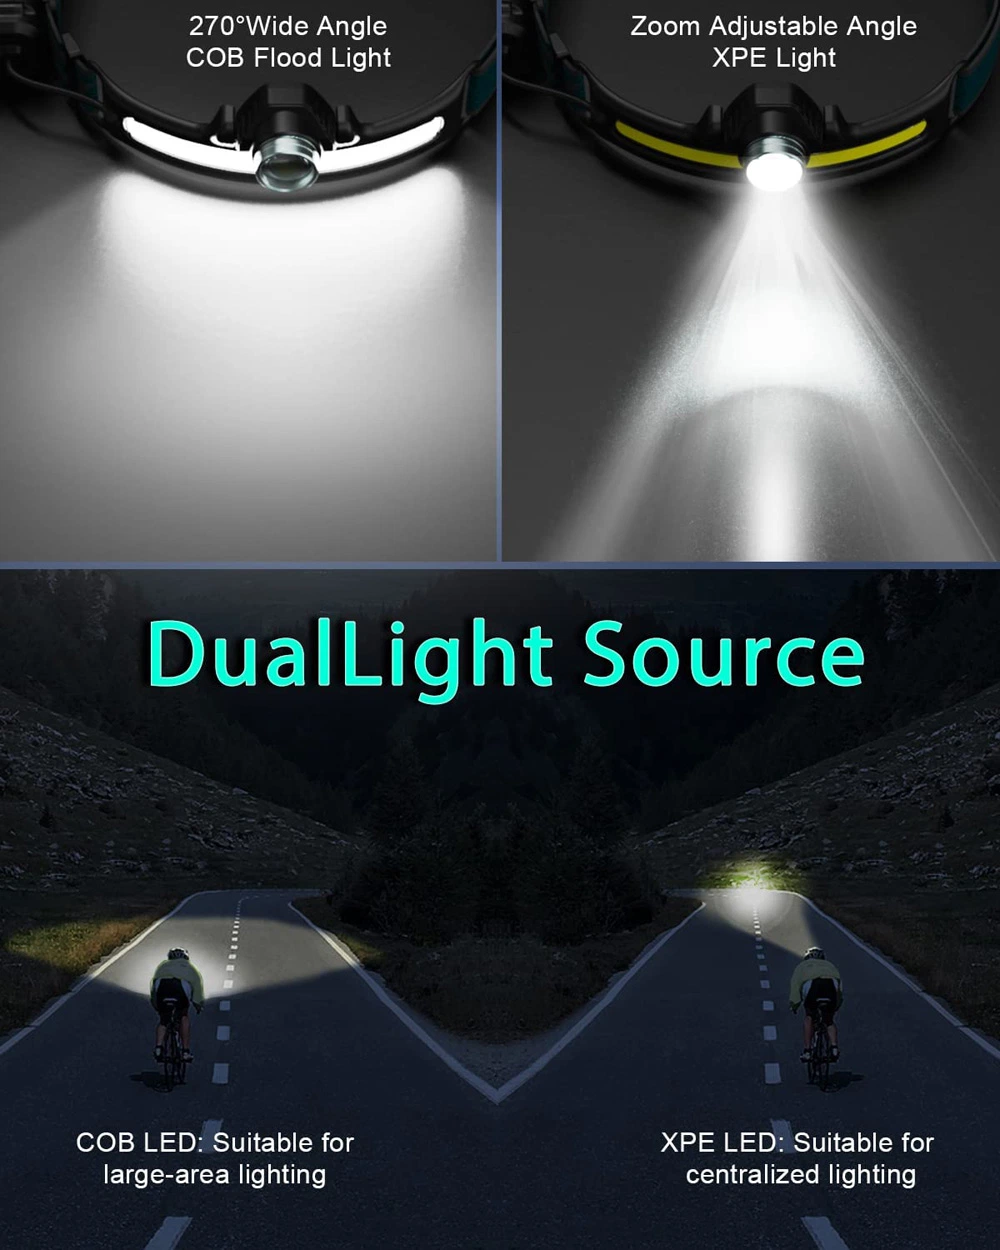 Induction LED Head Light Flashlight Headlamp RoHS Mining Head Torch with USB